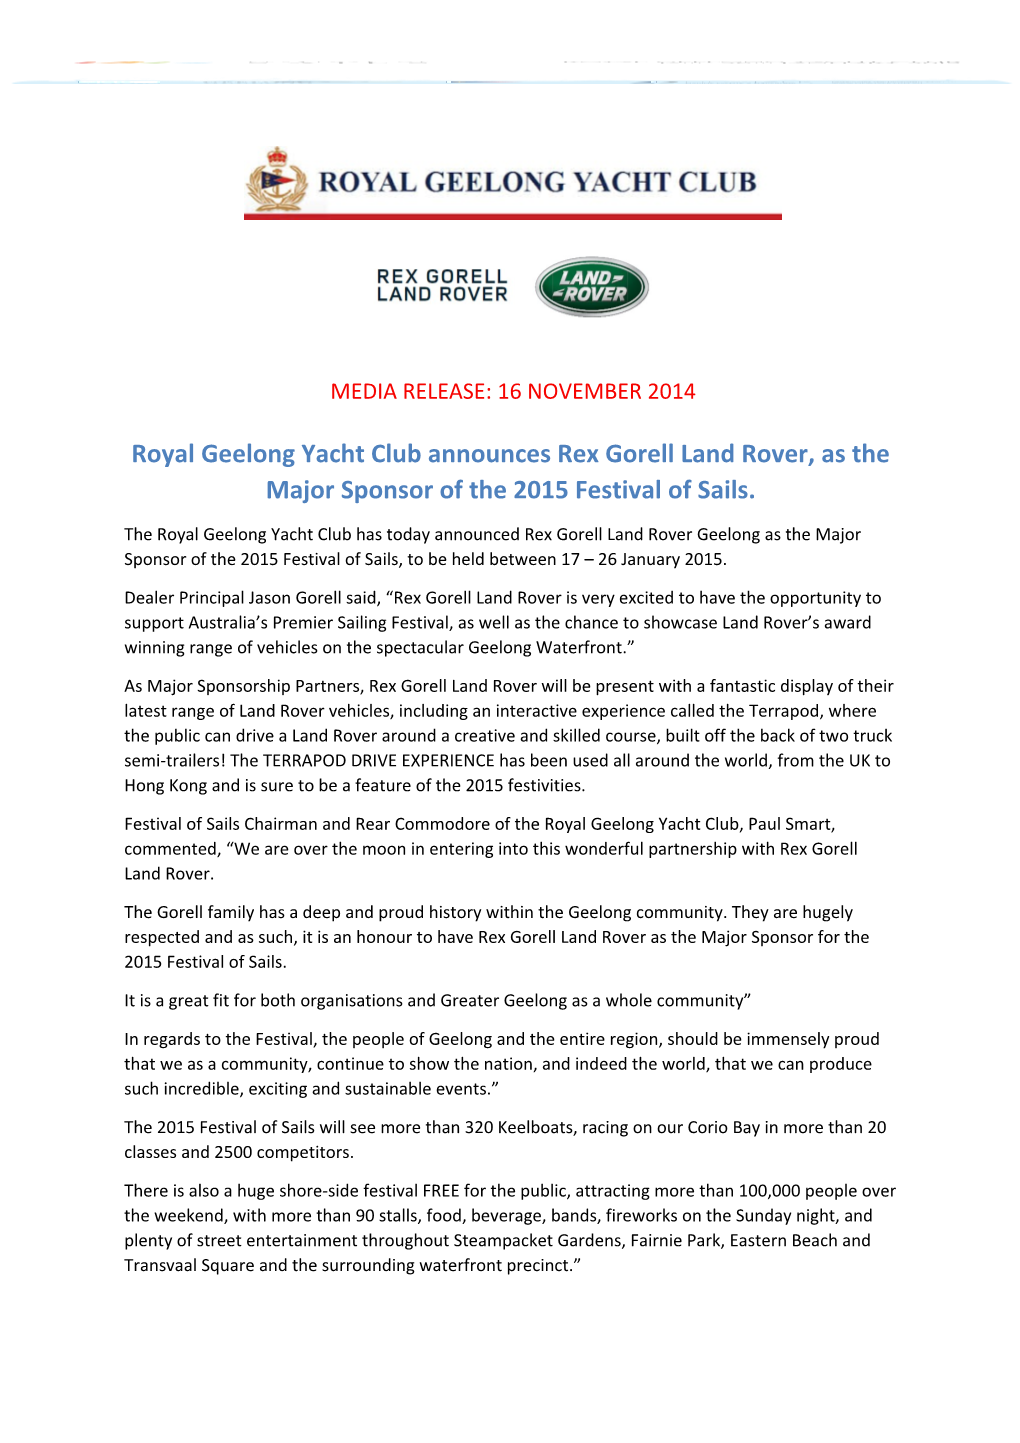 Royal Geelong Yacht Club Announces Rex Gorell Land Rover, As the Major Sponsor of The